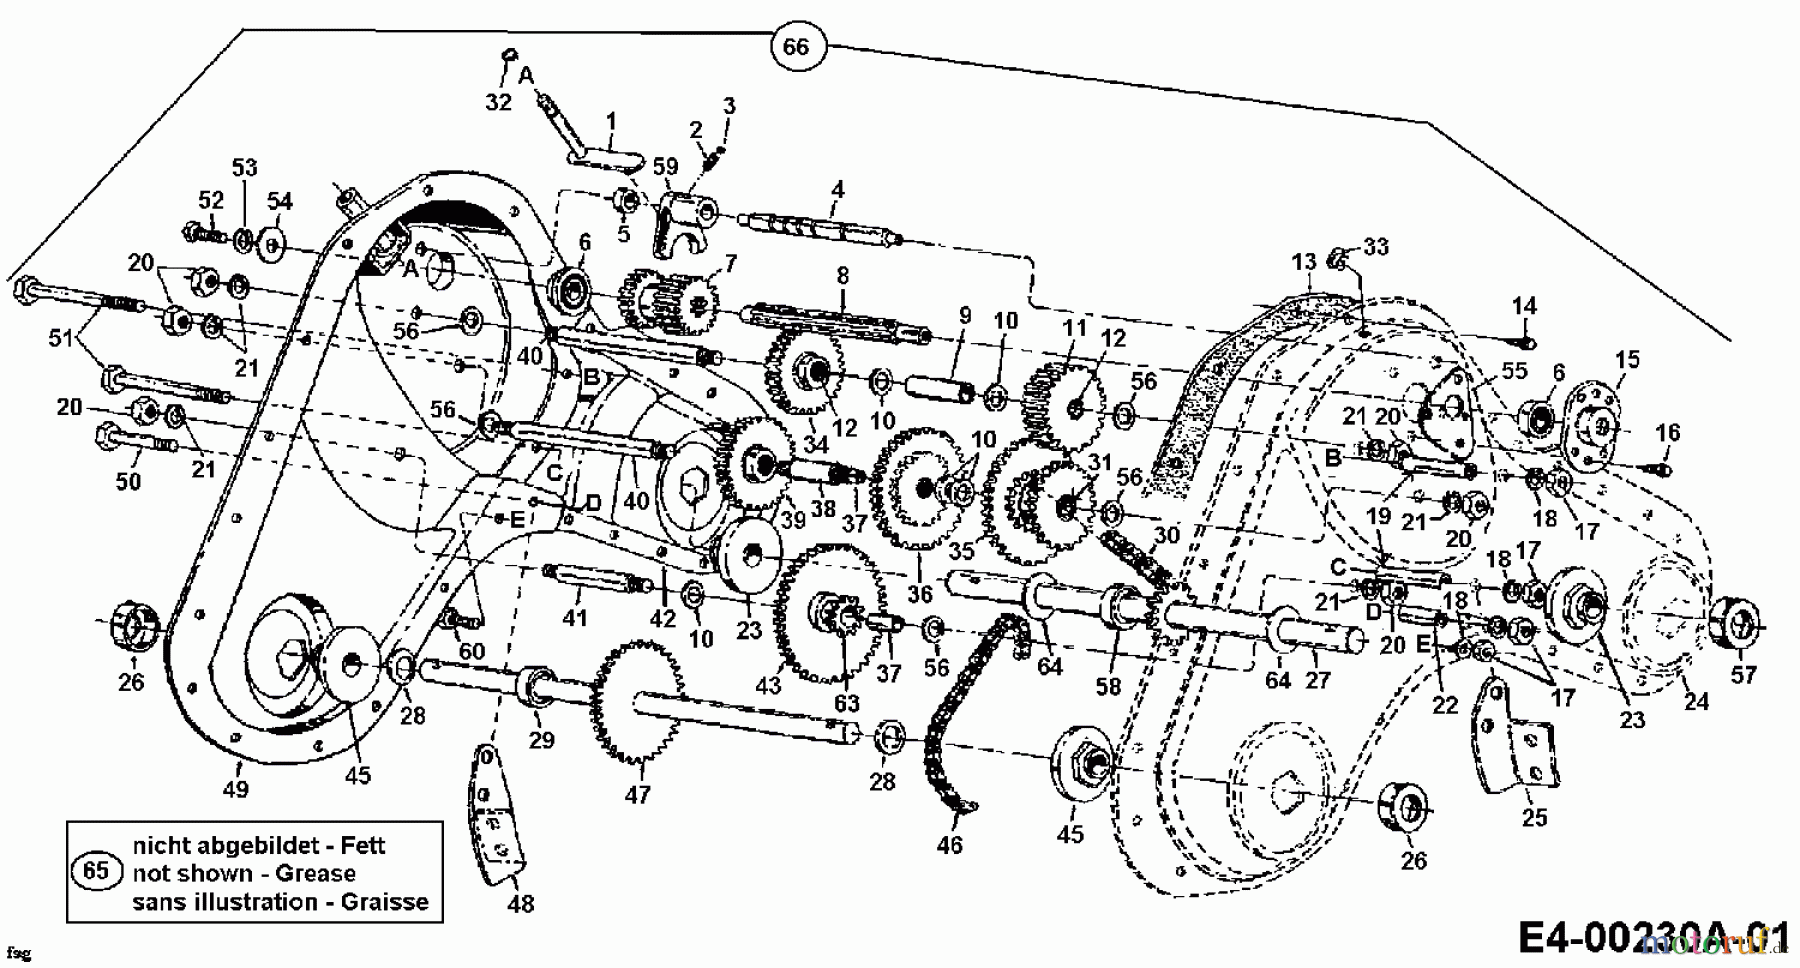  Yard-Man Motorhacken DT 550 21A-448B643  (2000) Getriebe